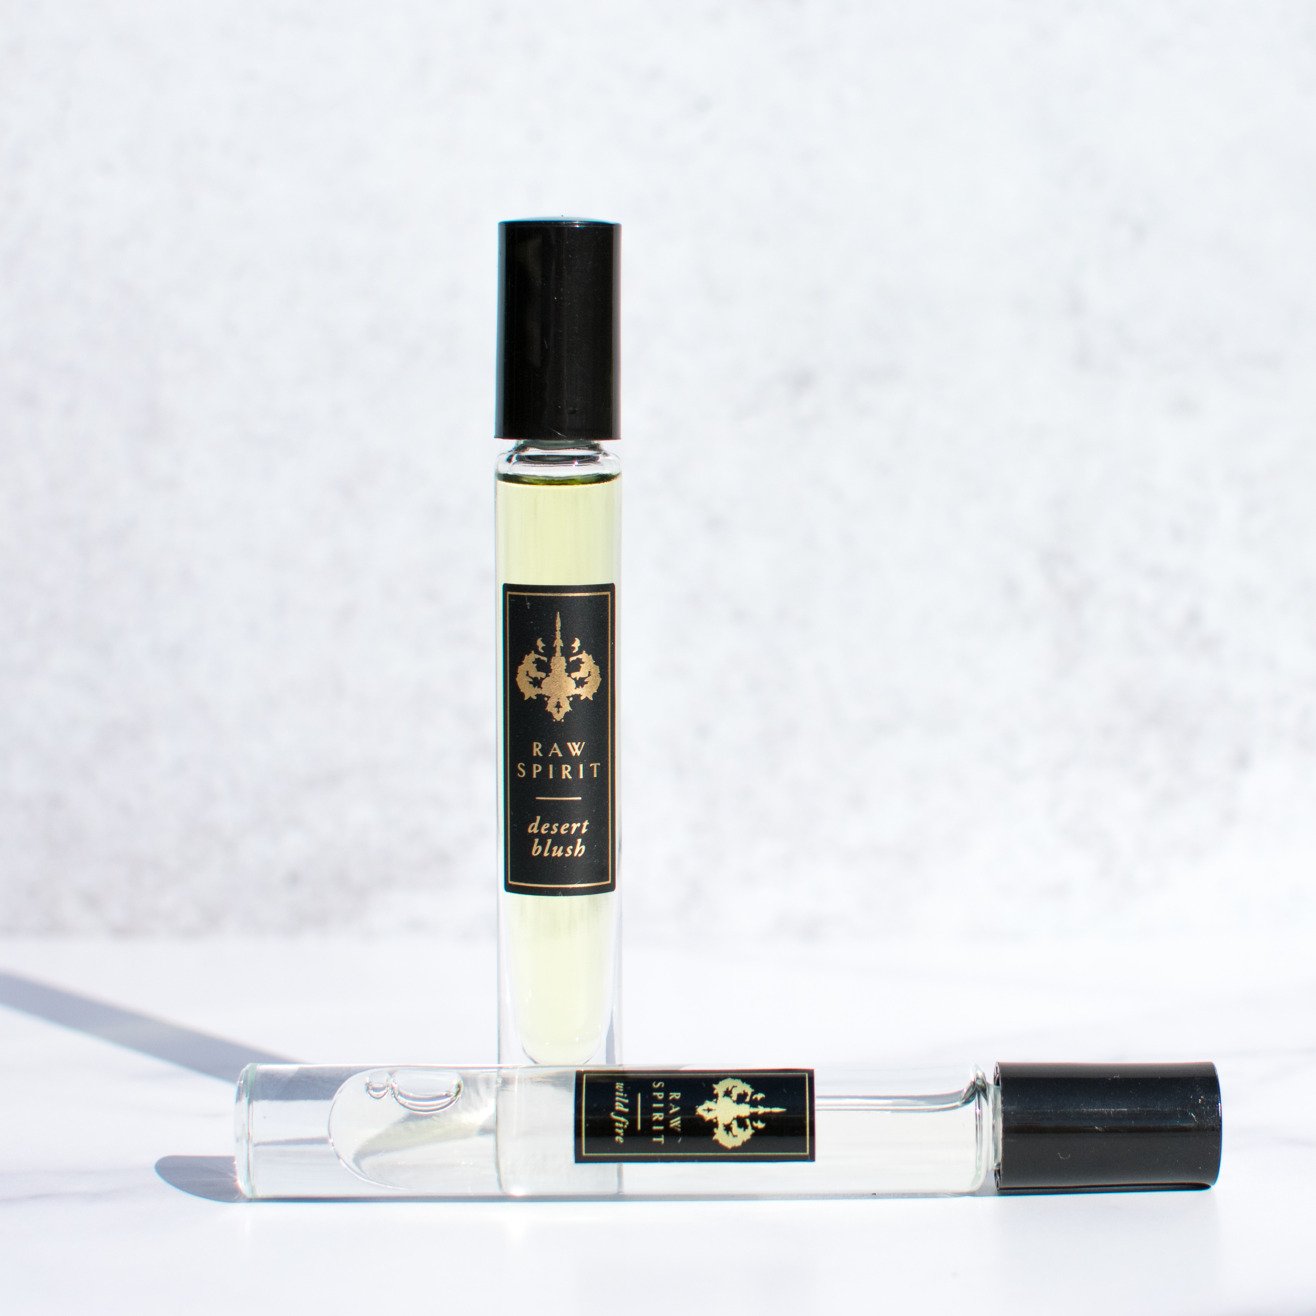 Discover Australia Unisex Perfume, Eau de Parfum Rollerball Set -DESERT BLUSH and WILD FIRE - Raw Spirit, Inc.